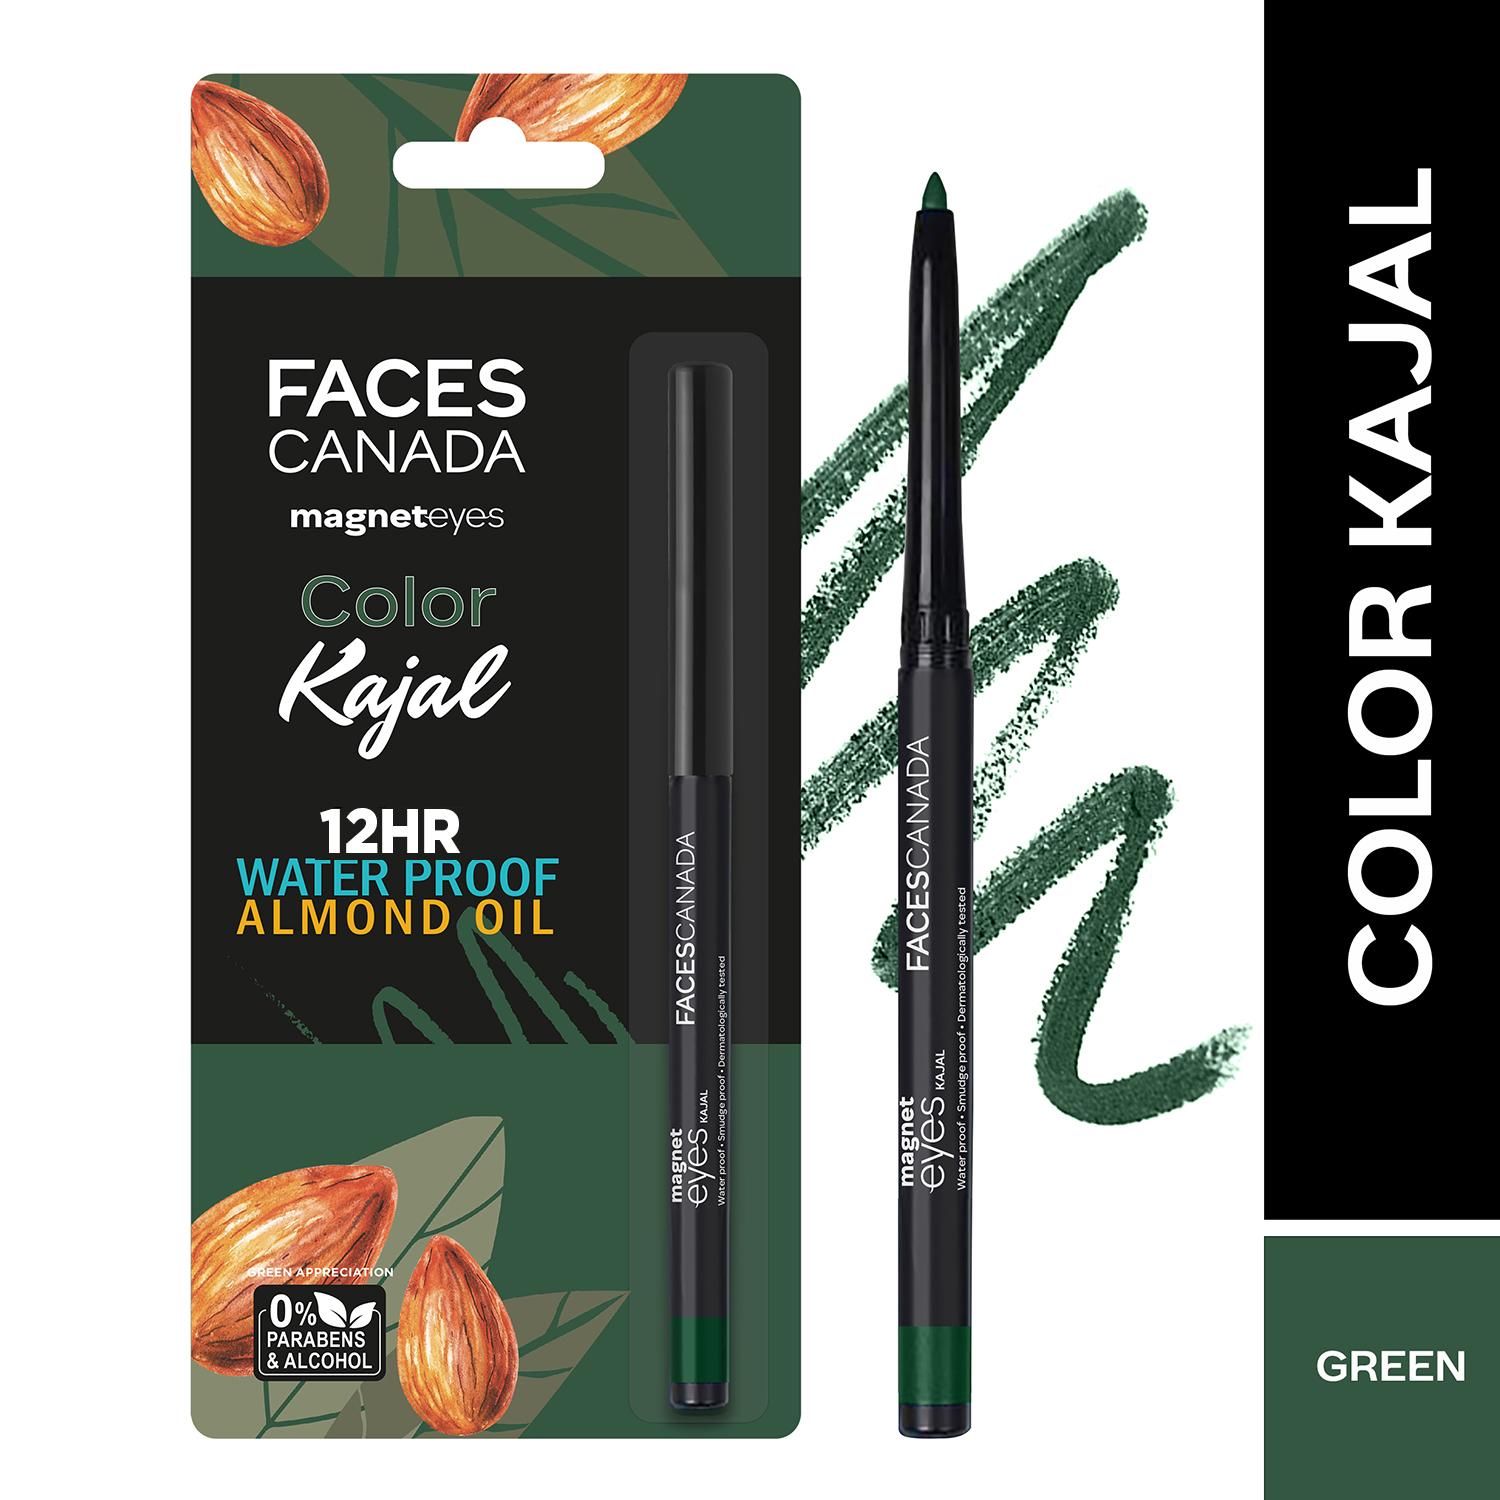 Faces Canada | Faces Canada Magneteyes Color Kajal - Green Appreciation 02, 12 HR Stay, Matte Finish (0.30 g)